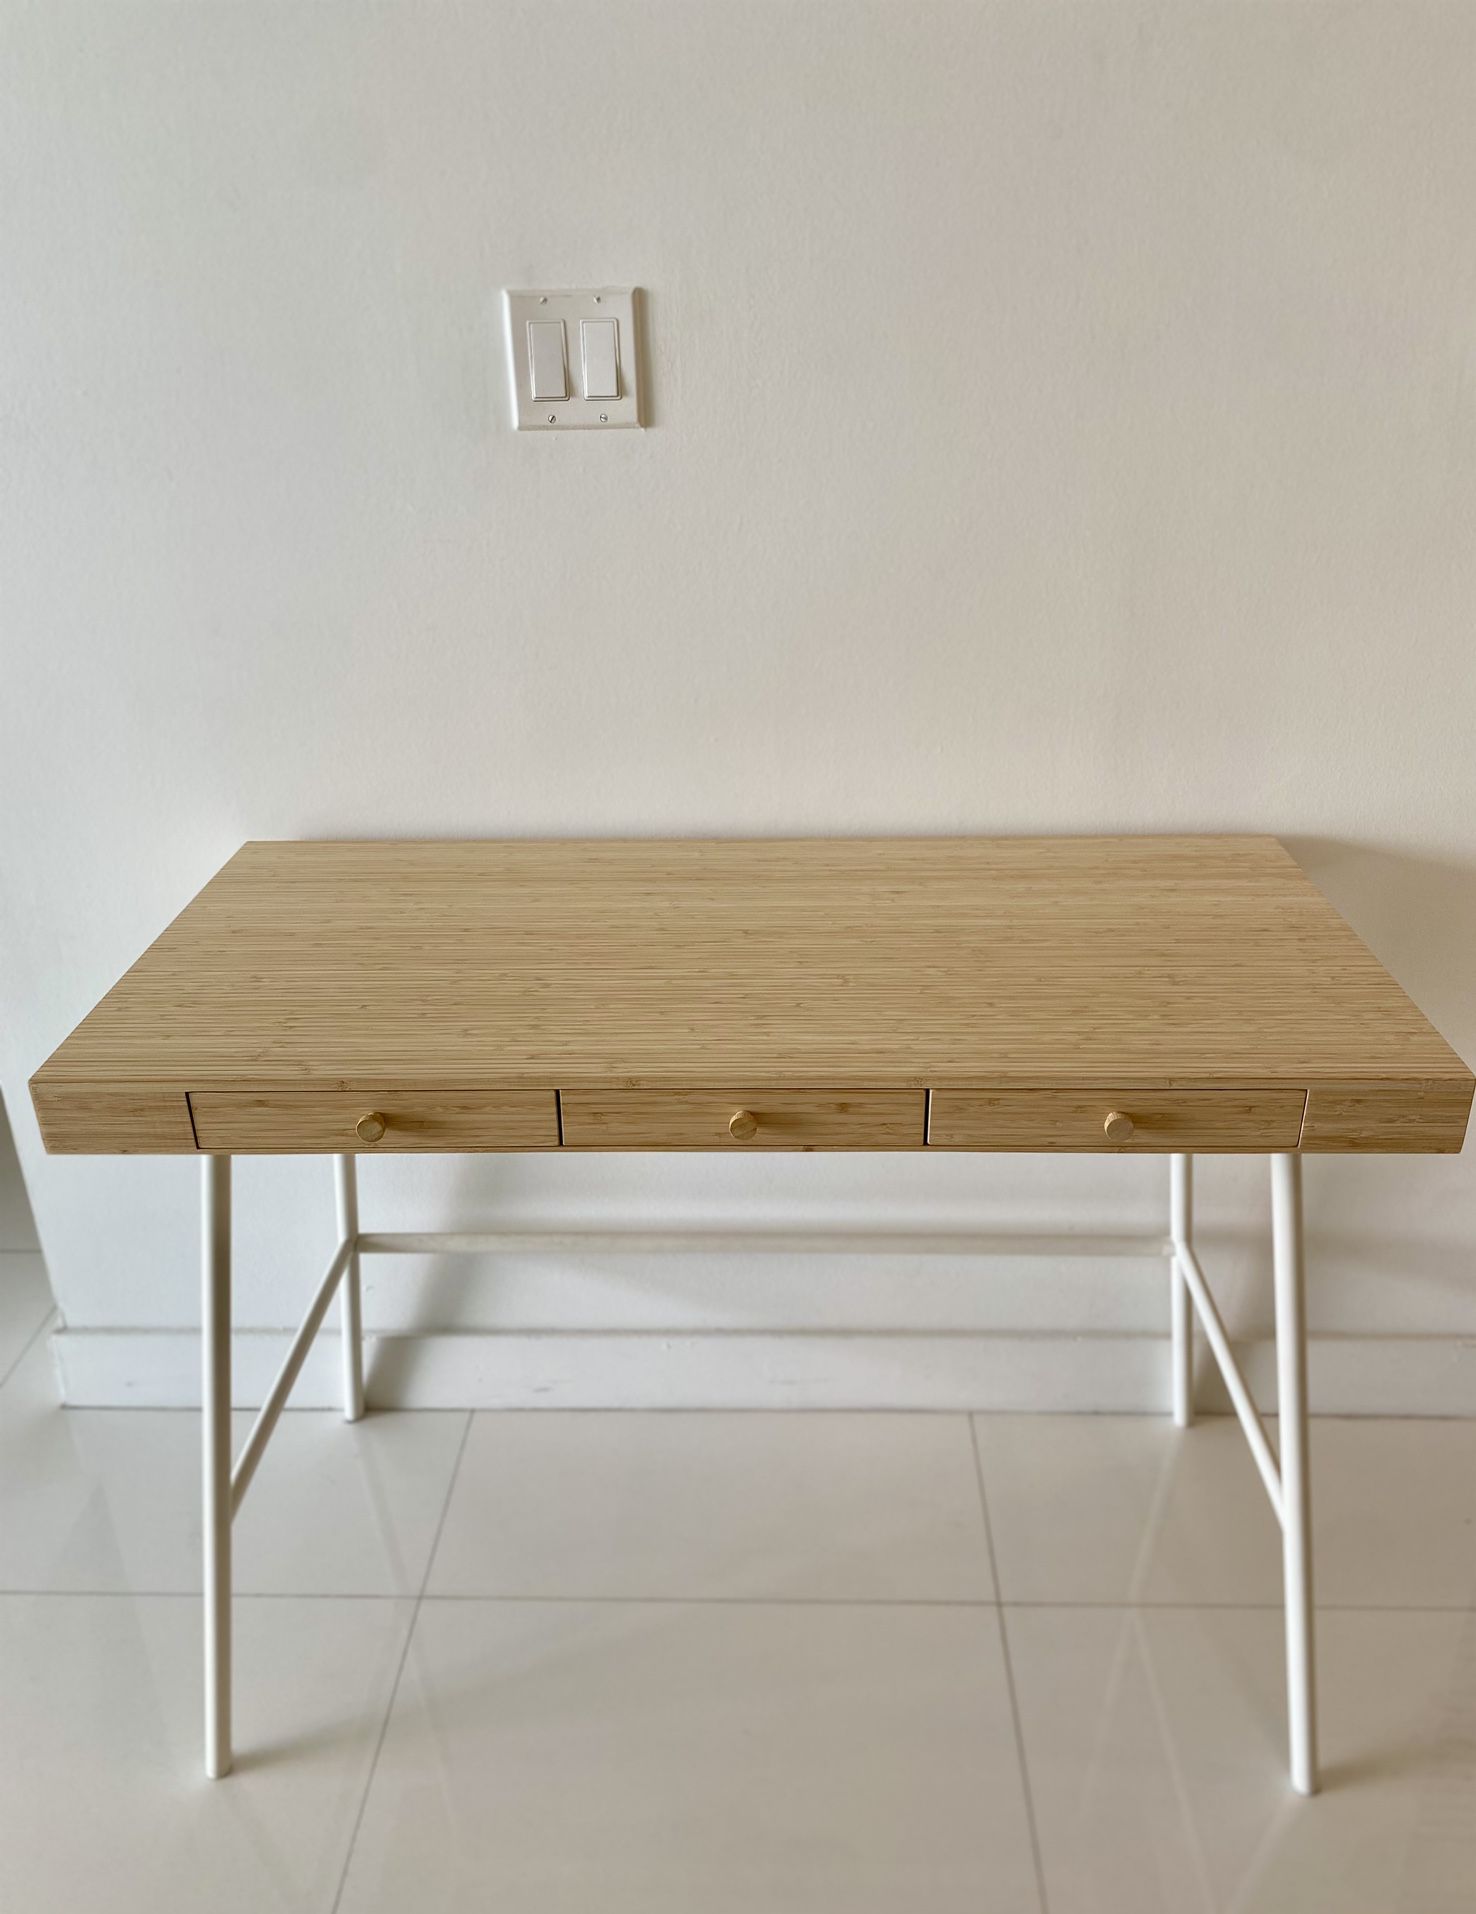 Desk For Home - bamboo, like new 